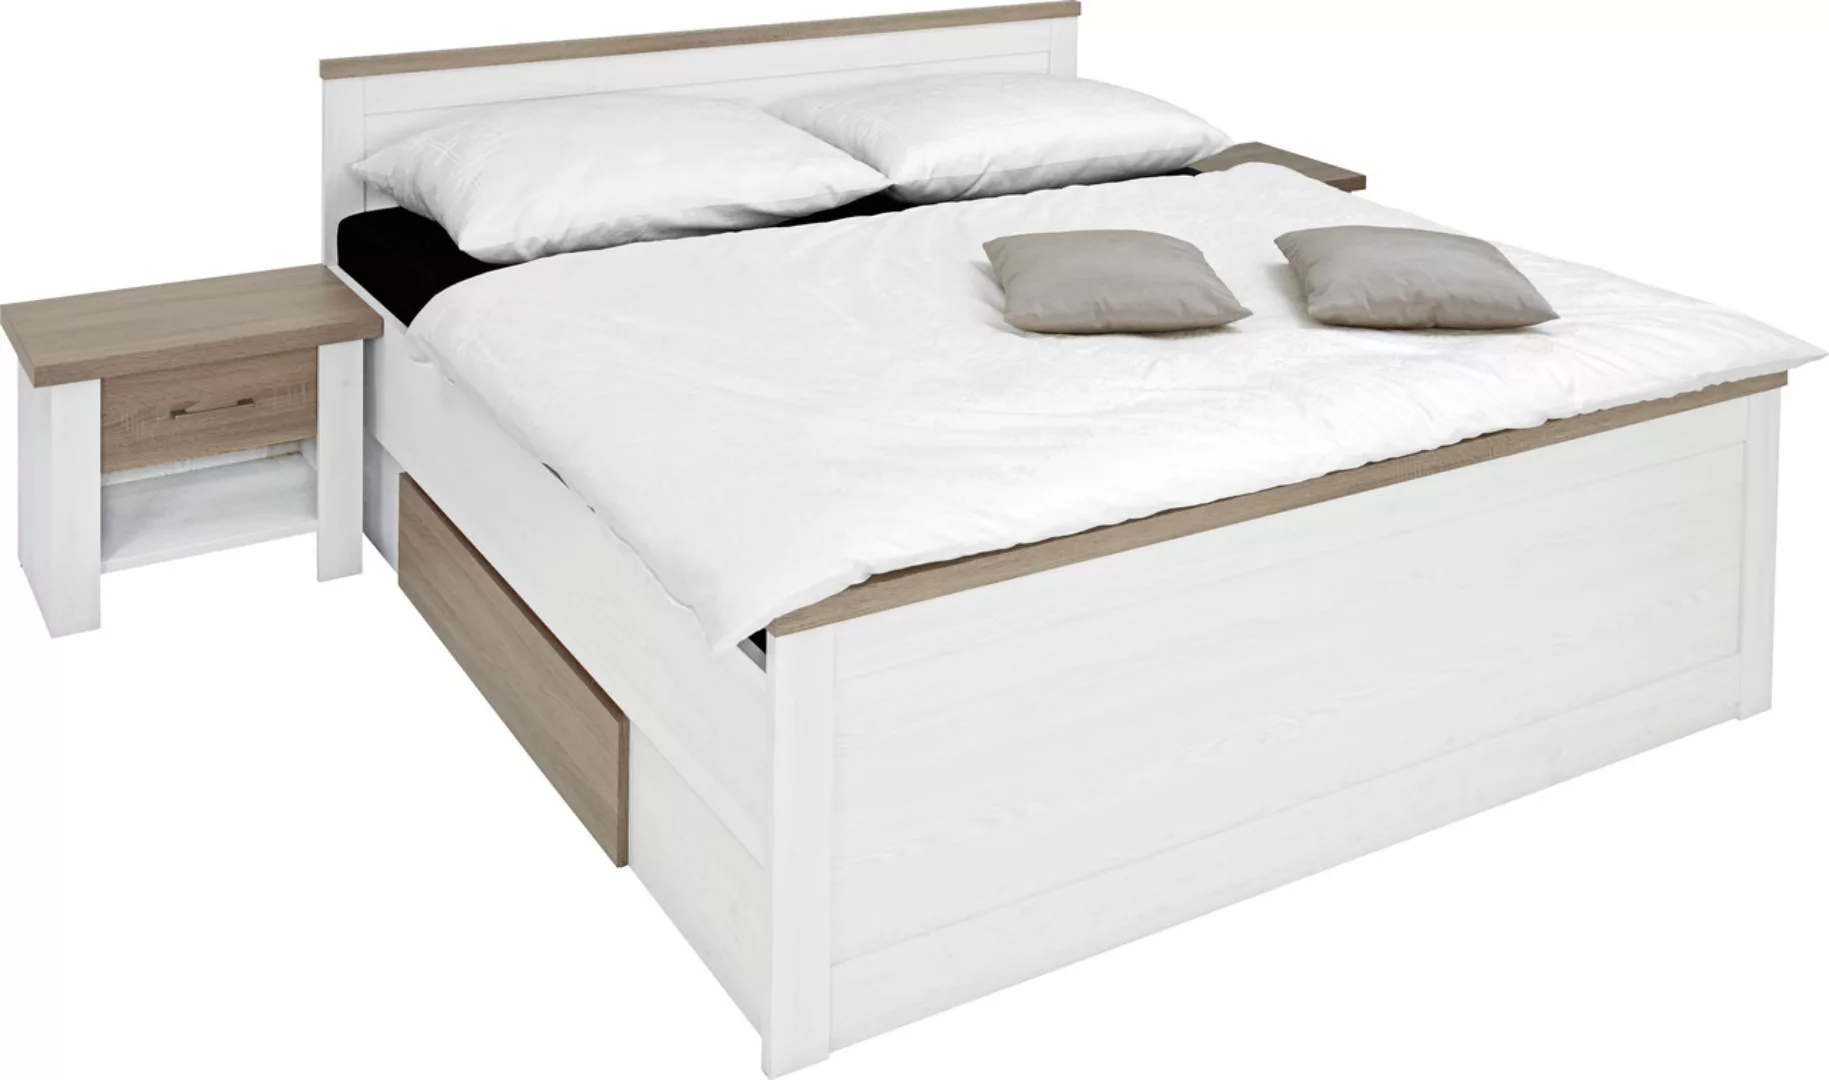 Pol-Power Bettgestell Bettanlage Doppelbett Bett Gästebett 180x200 cm inkl. günstig online kaufen